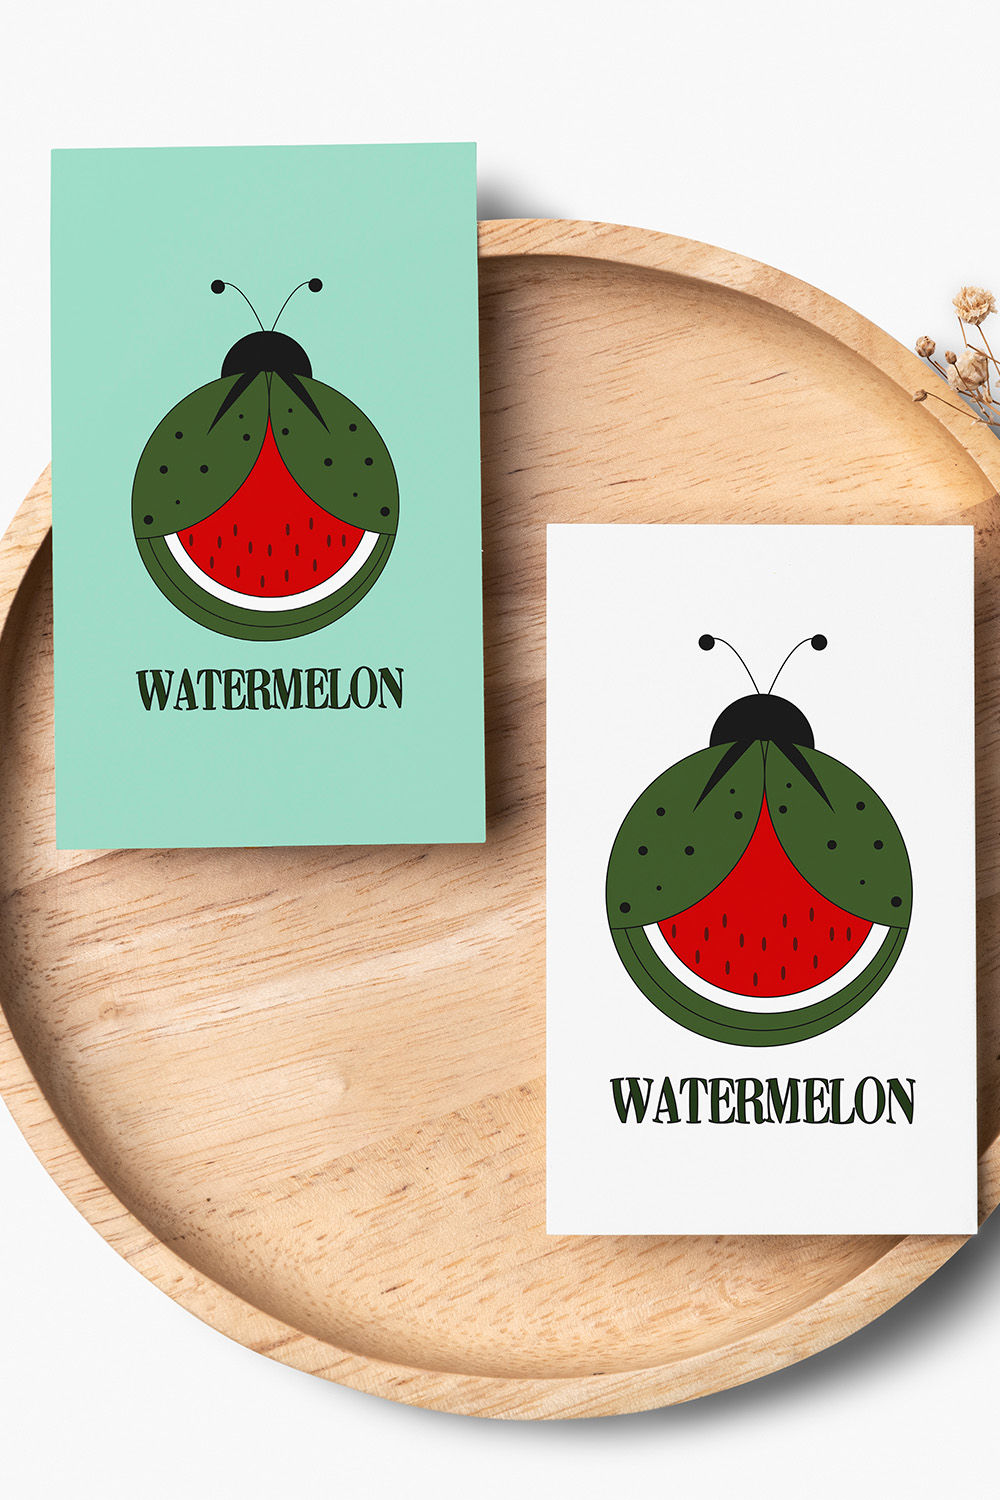 Ukrainian watermelon art logo vector pinterest preview image.